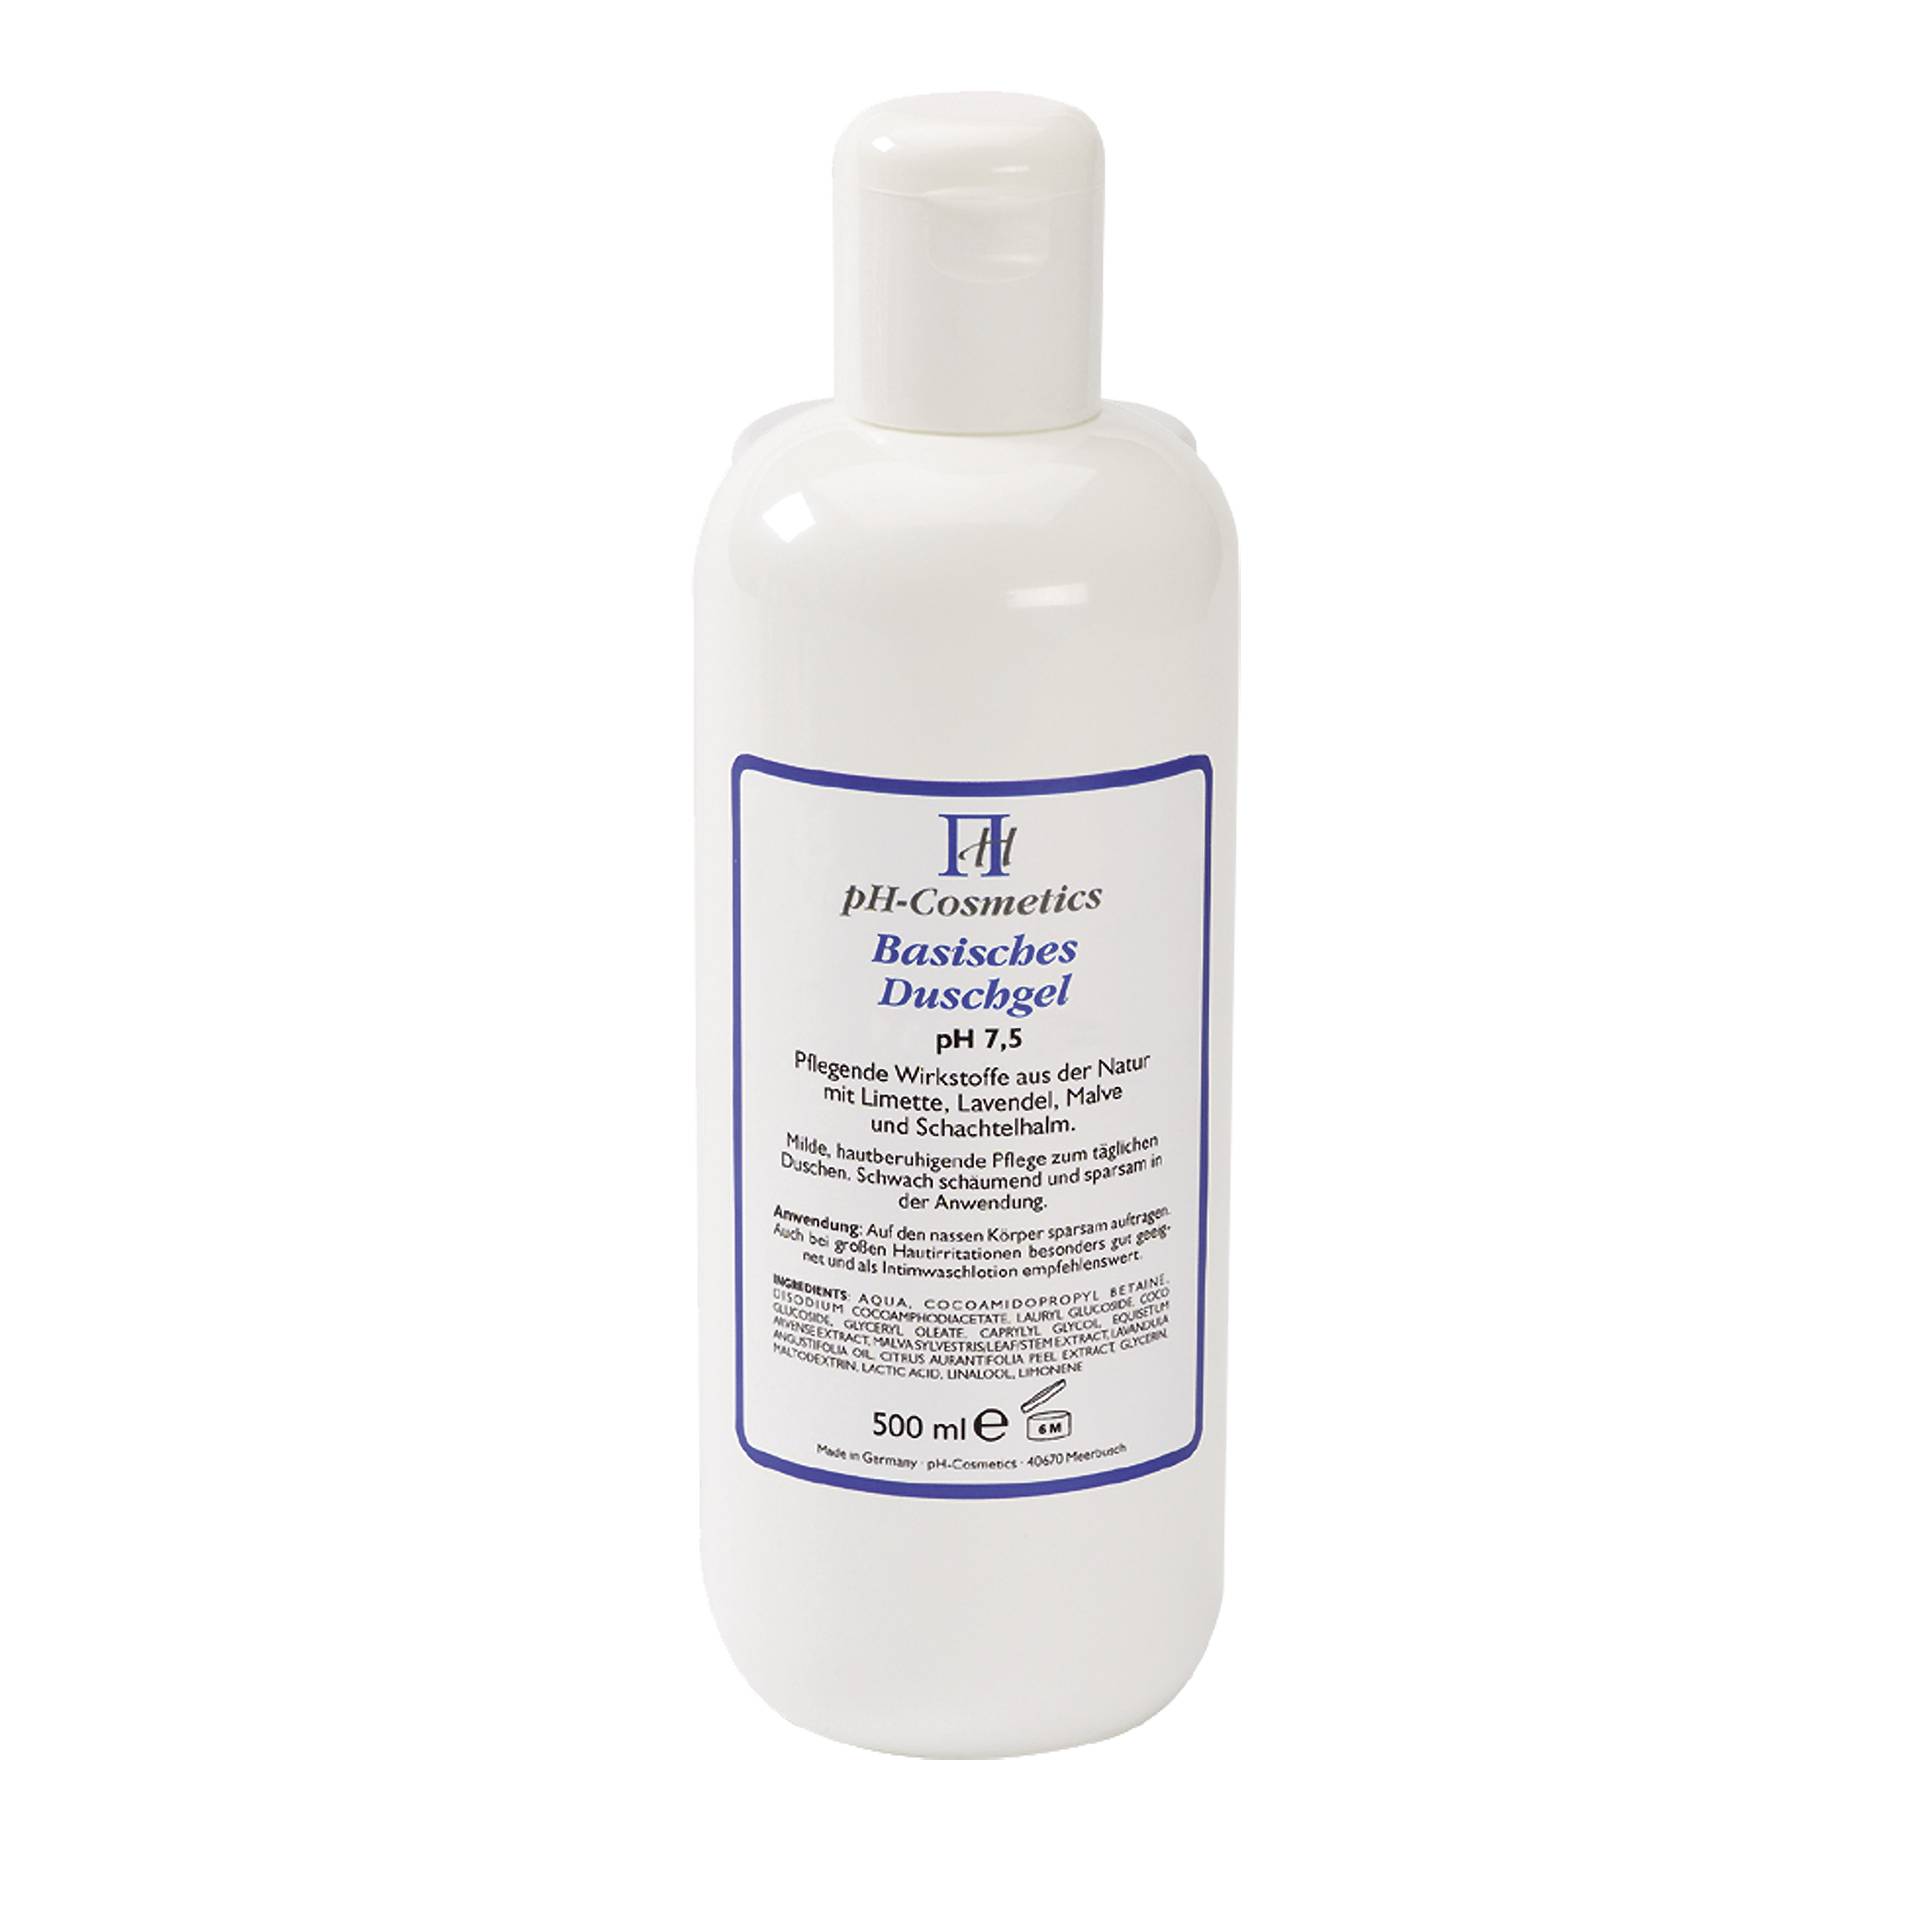 pH-Cosmetics Basisches Duschgel pH 7.5 500 ml - Beruhigt die Haut - vegan - ph Cosmetics von ph Cosmetics